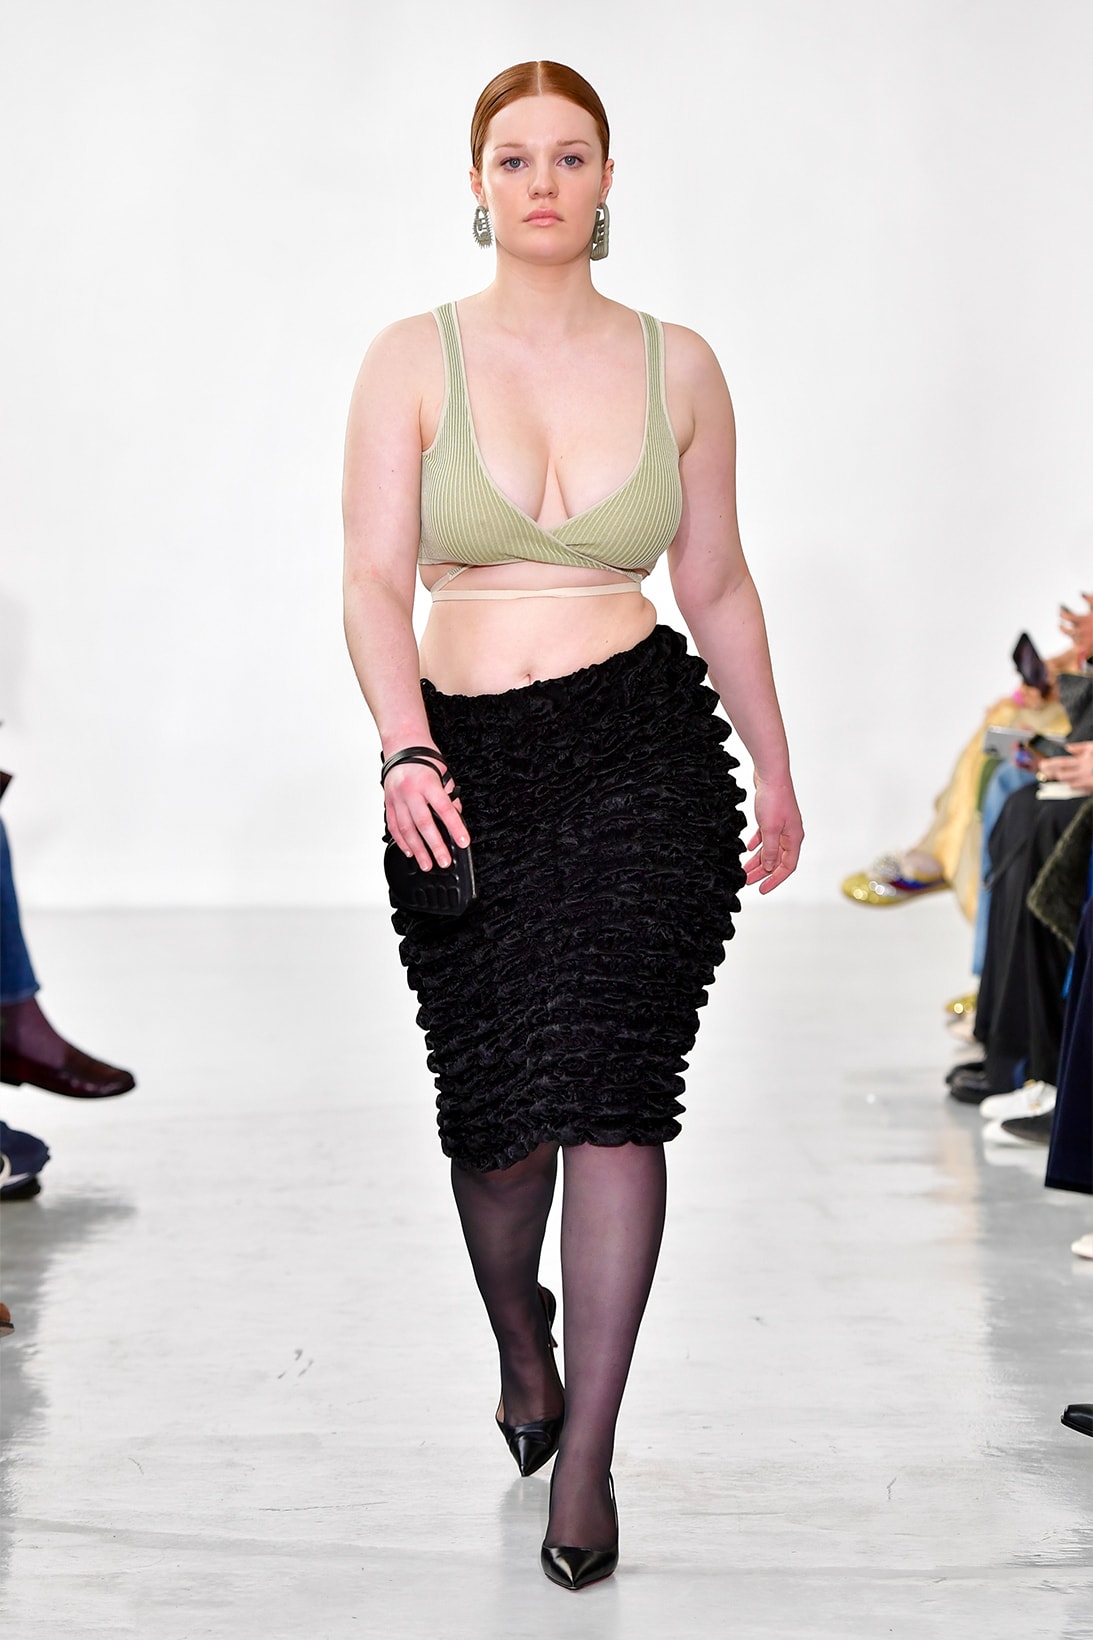 Ester Manas Fall Winter Collection Size Inclusivity Cut-Outs Fashion Week Runway Show Photos Ruffled Dress Bra Top Green Black